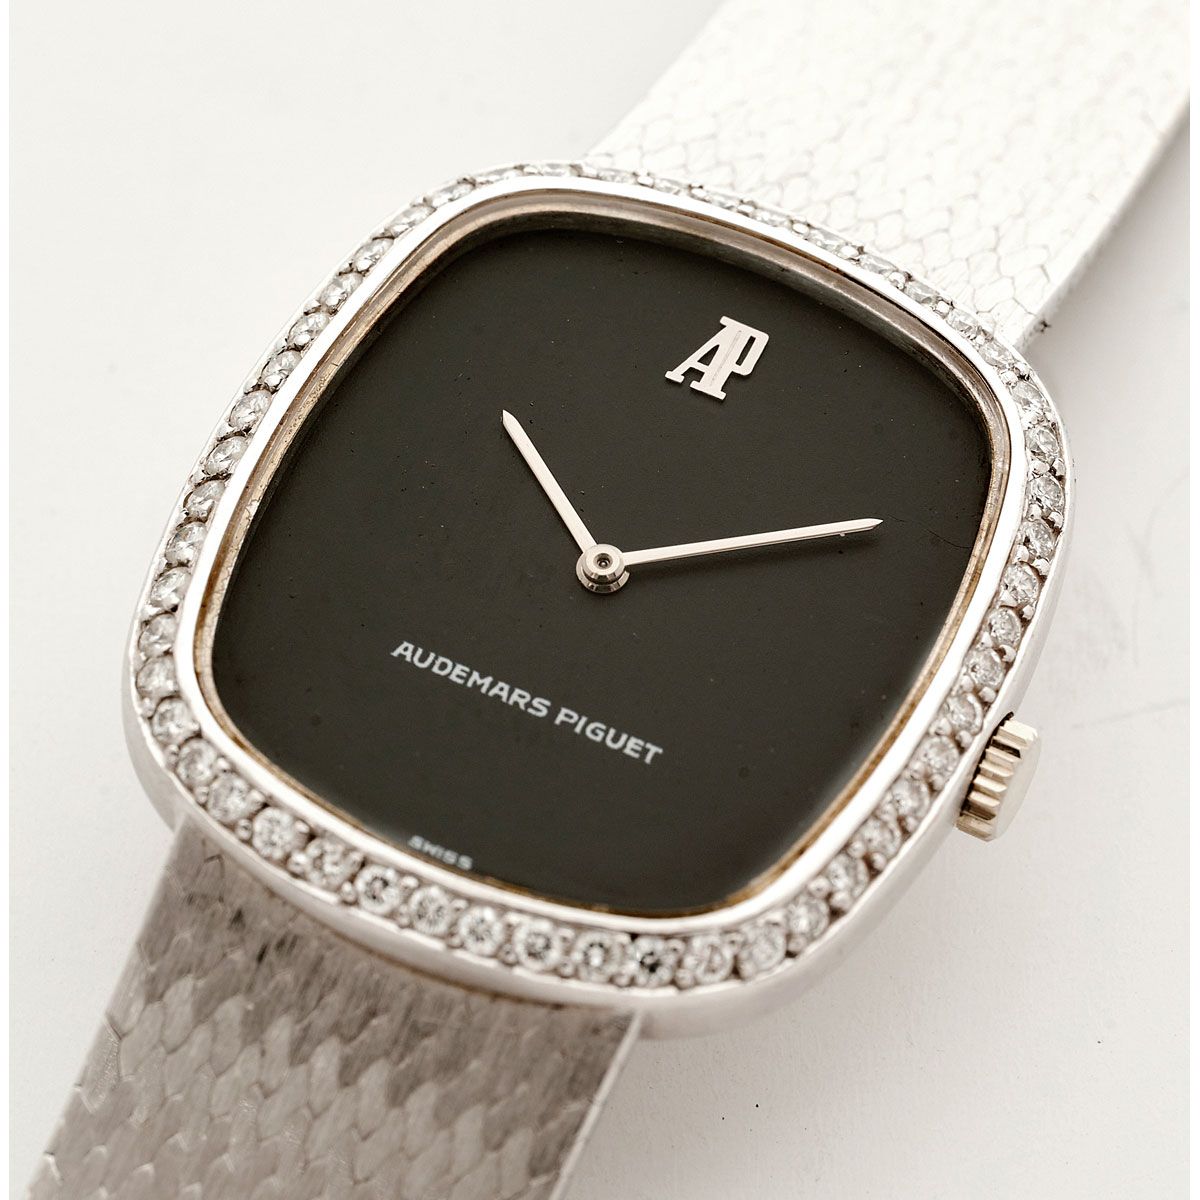 Null Audemars Piguet, n° B33830, vers 1975.

Une belle montre de dame en or blan&hellip;